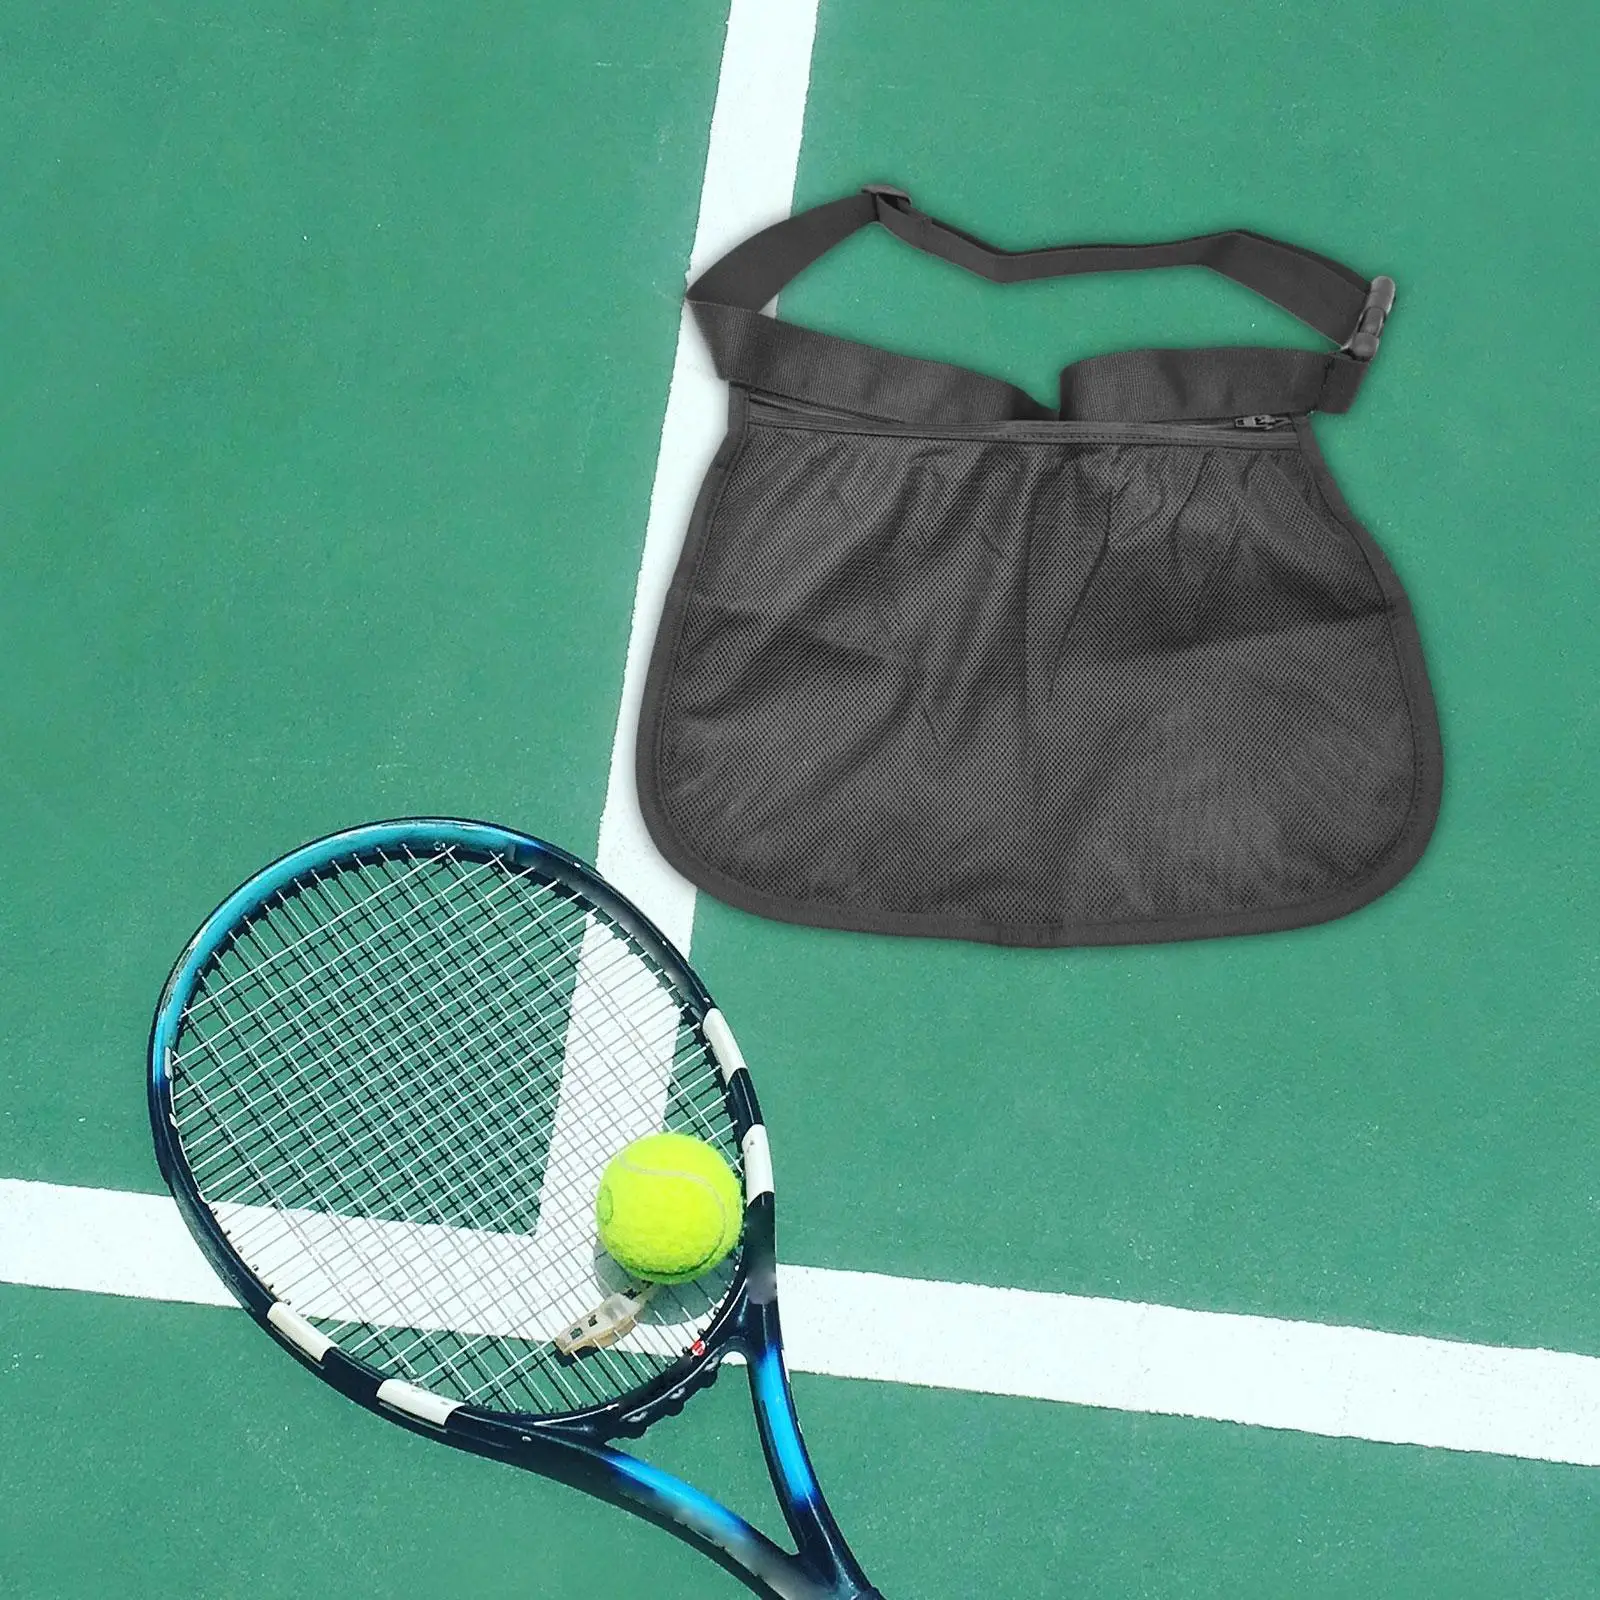 Black Tennis Ball Holder Carrier Gadgets Golf Balls Fanny Pack for Women Men Exercise Fitness Workout Storing Balls and Phones